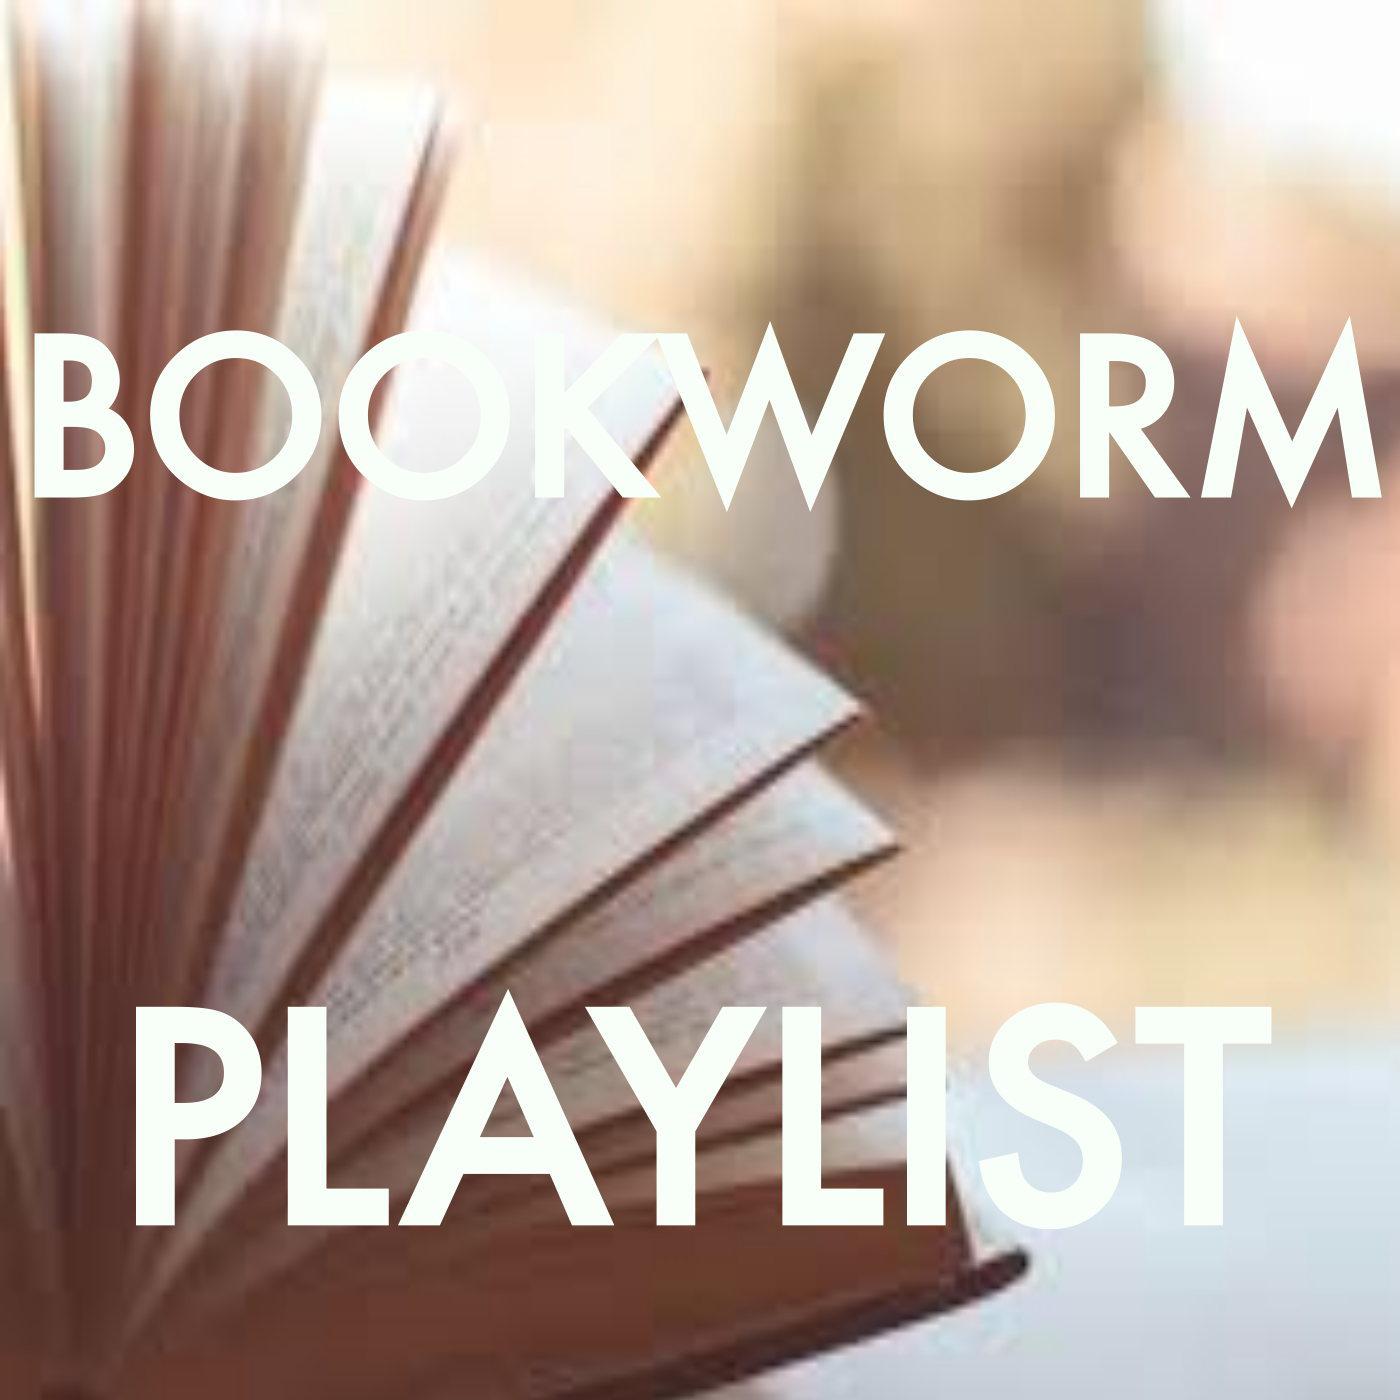 Bookworm Playlist